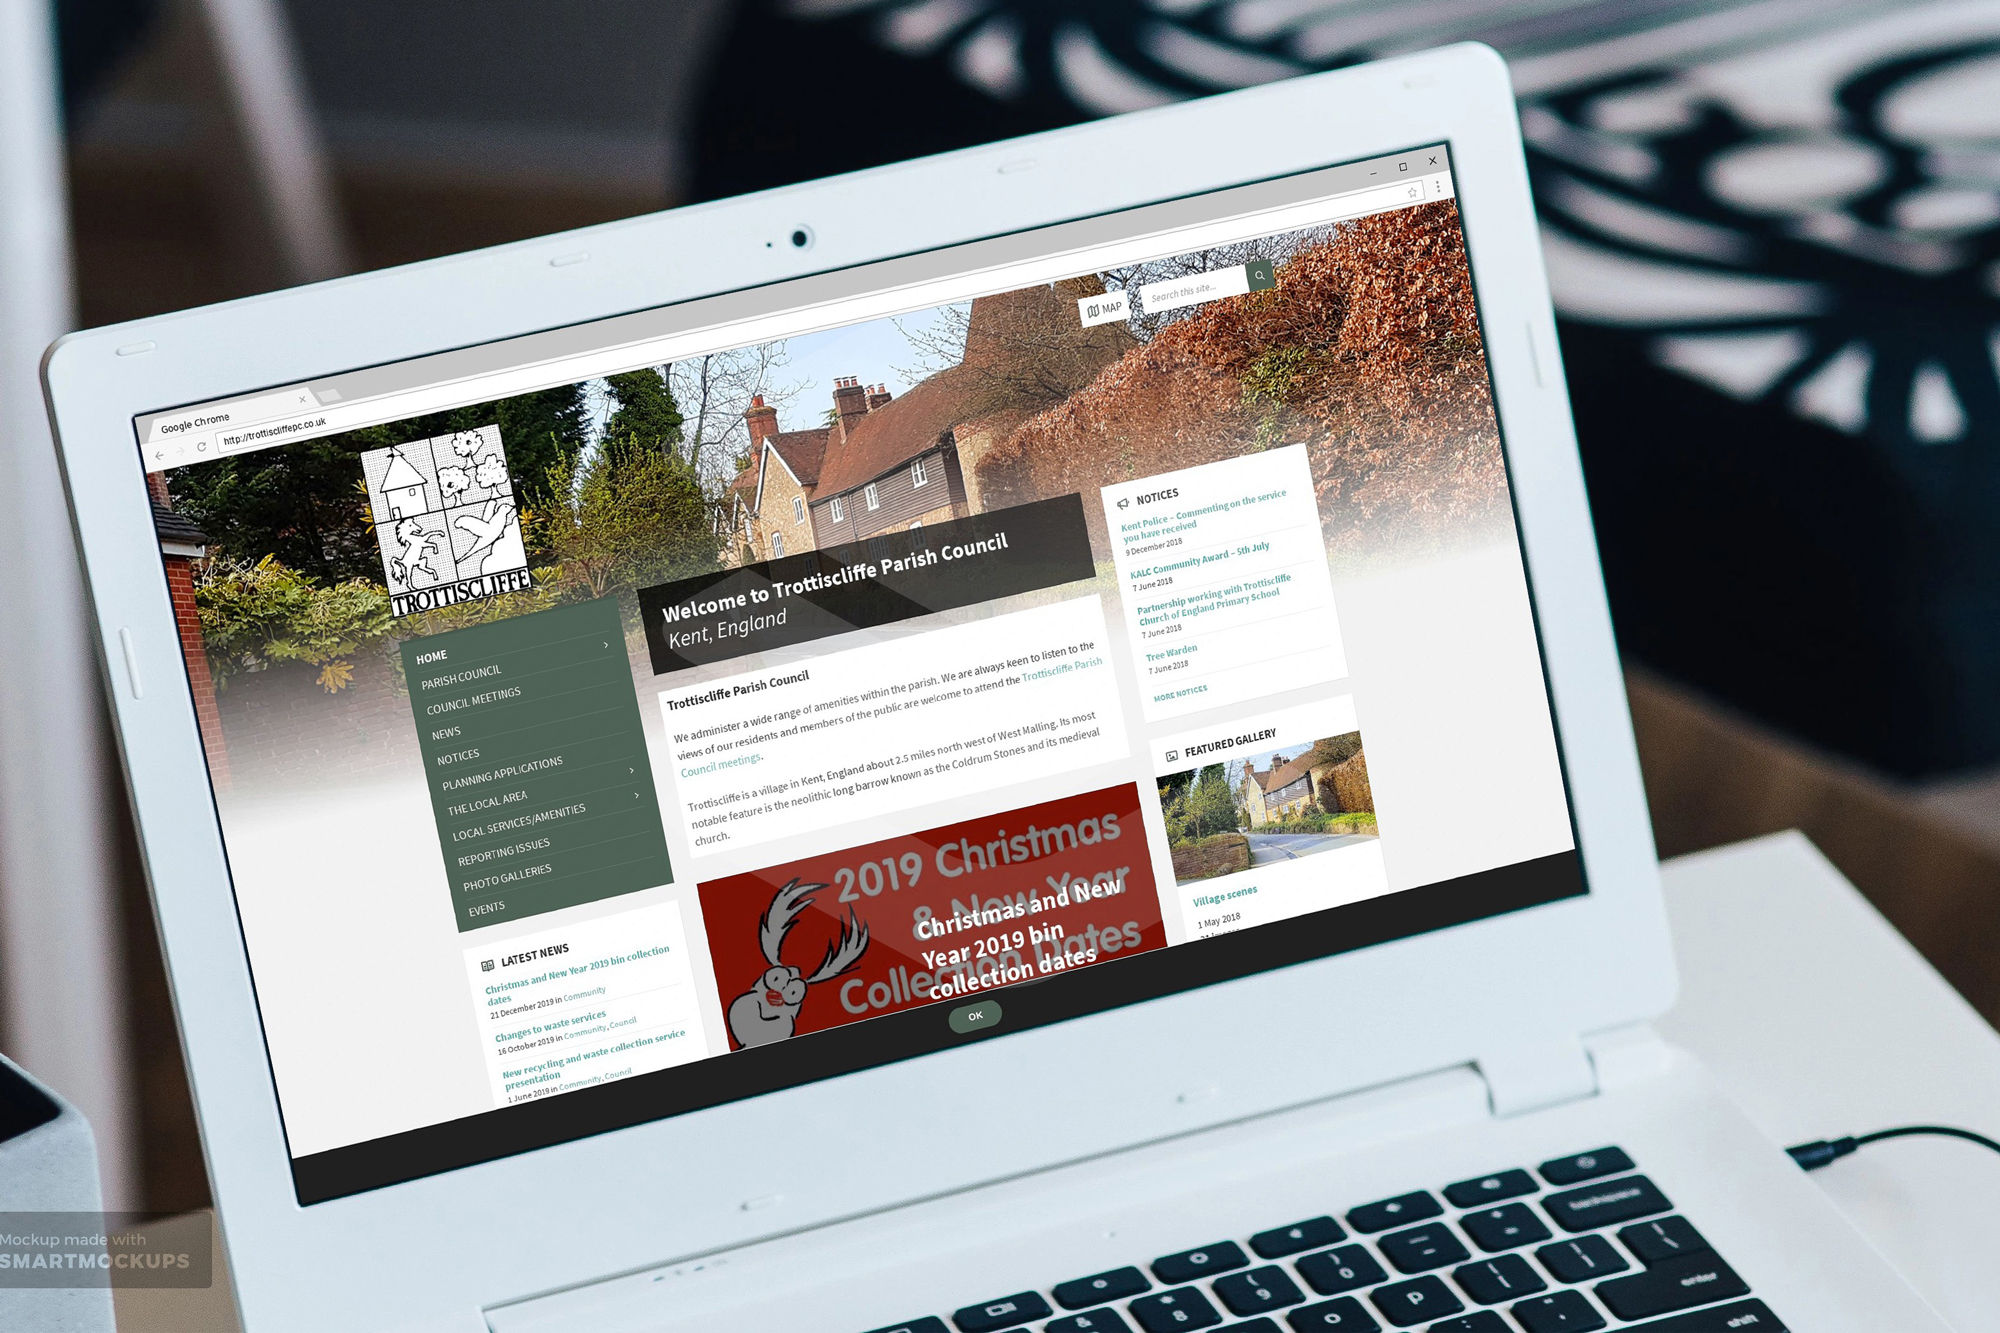 Trottiscliffe Parish Council website displayed on a laptop